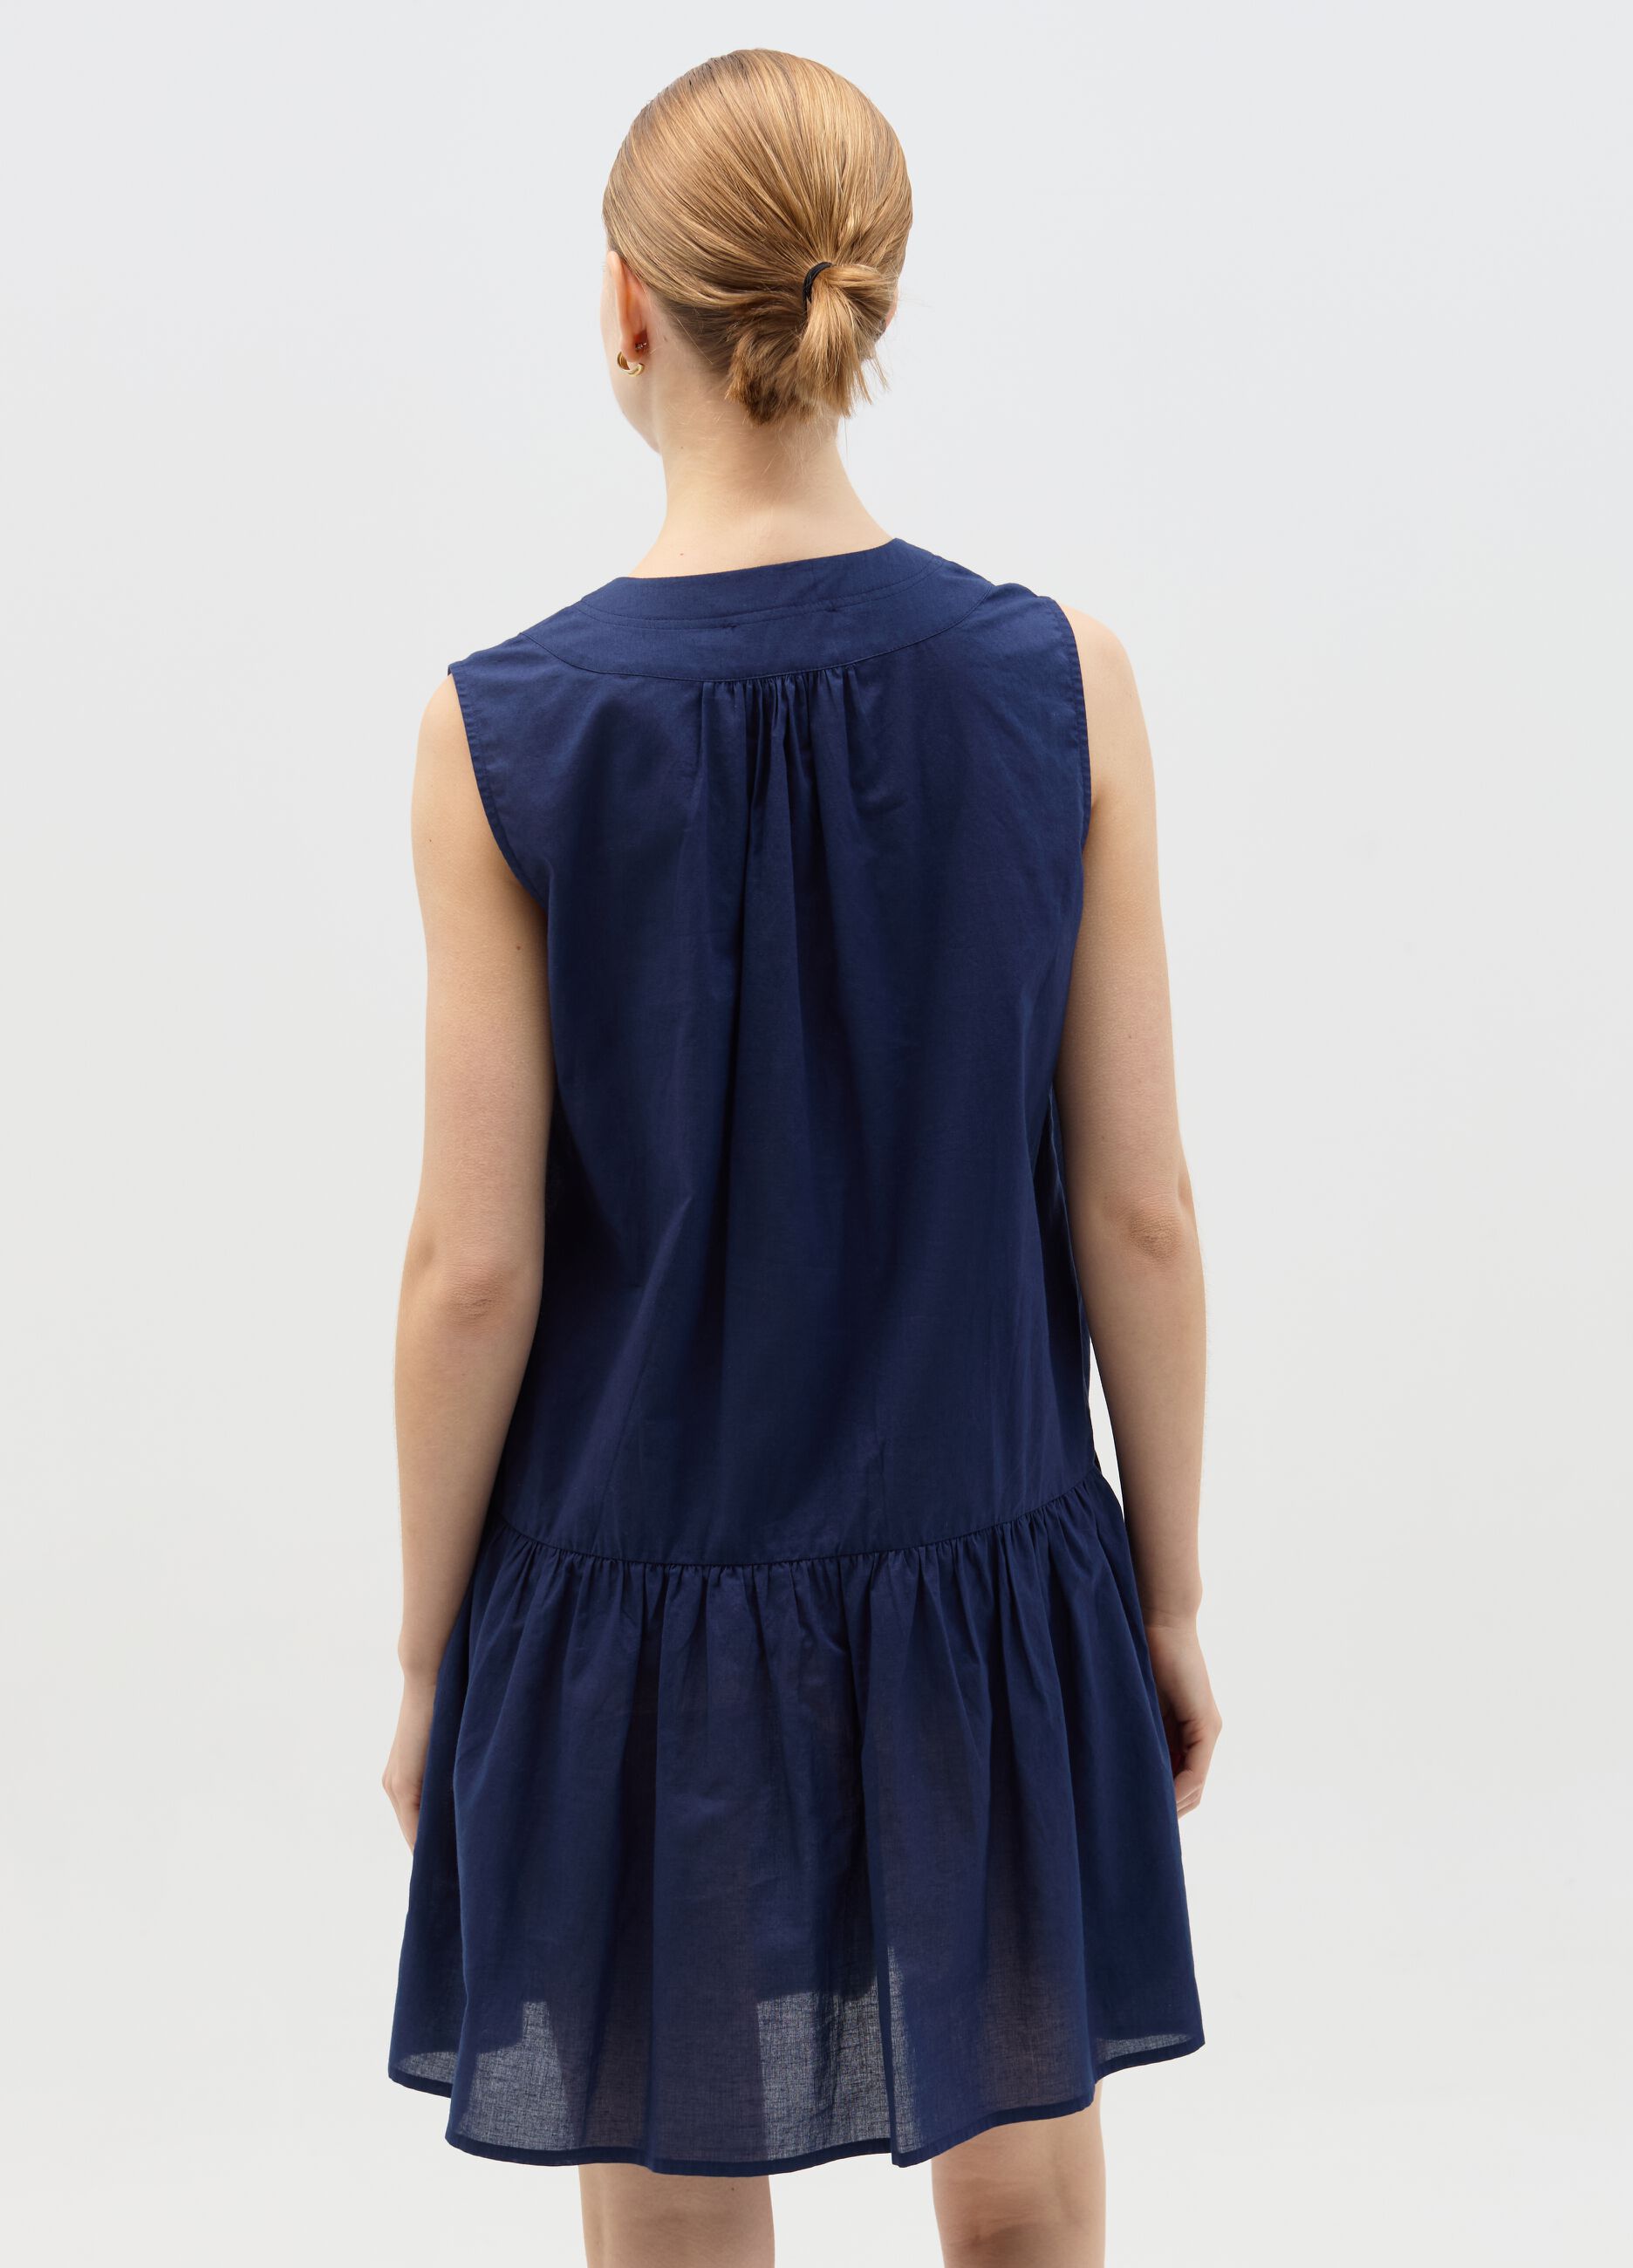 Short sleeveless dress with flounce